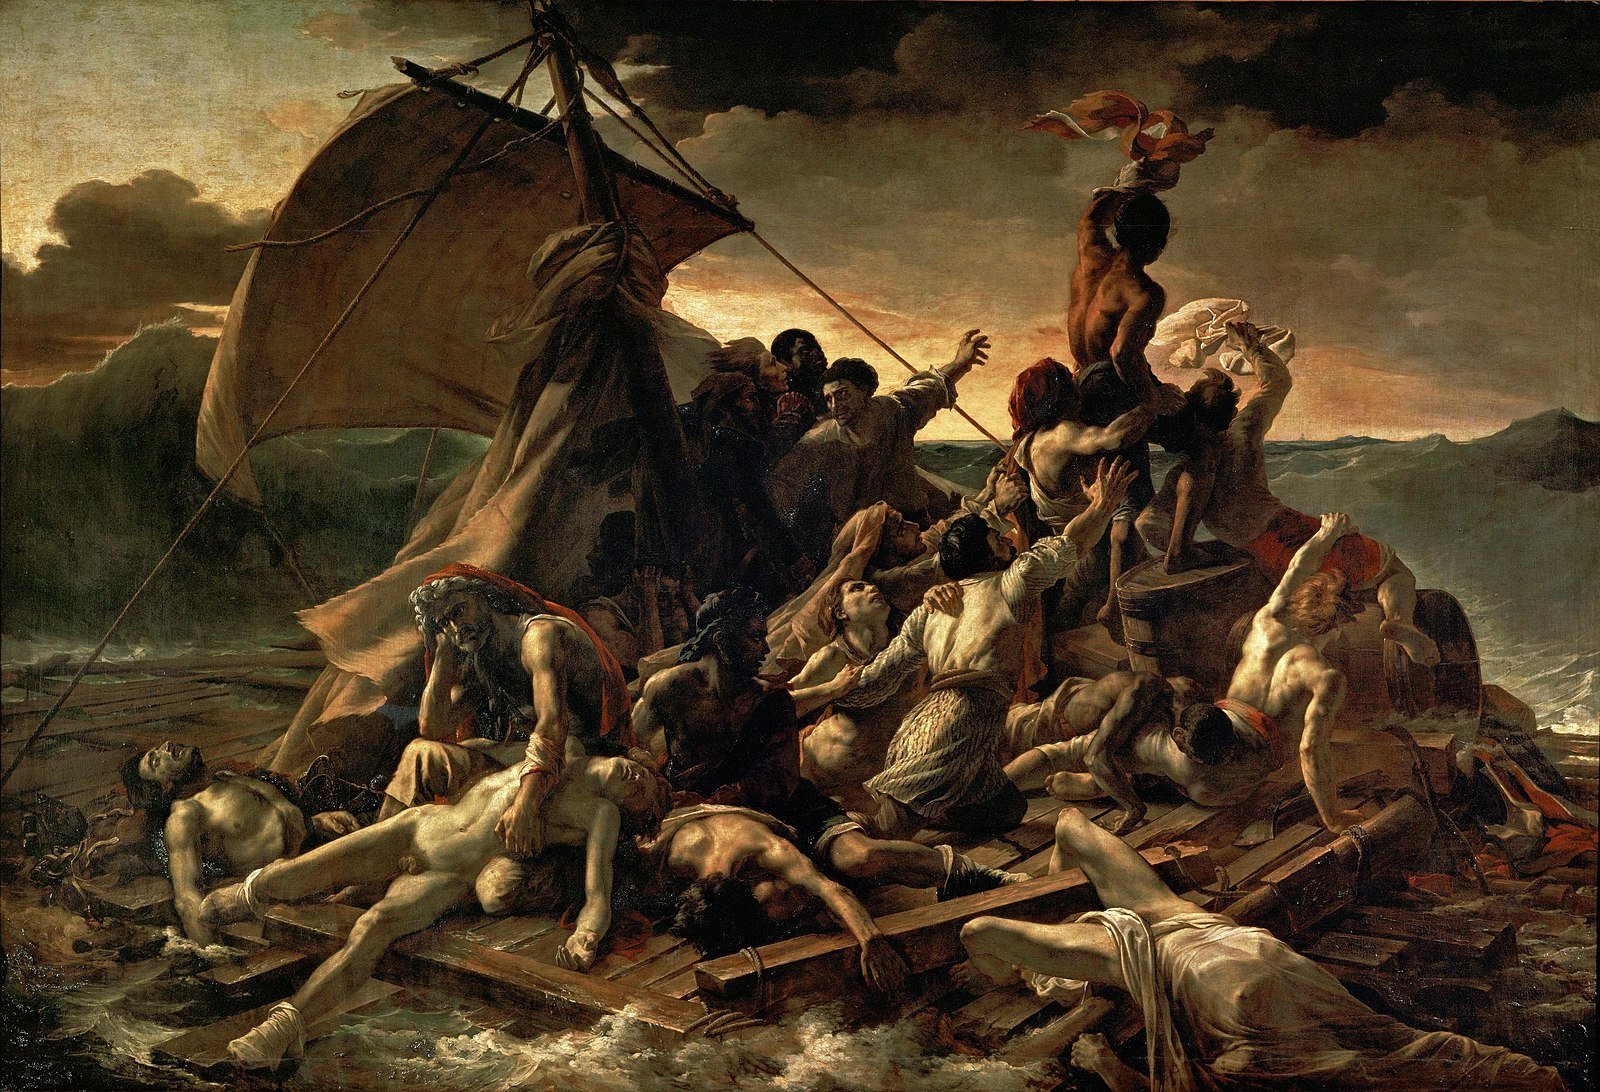 The Raft of the Medusa by Théodore Géricault. 1819.